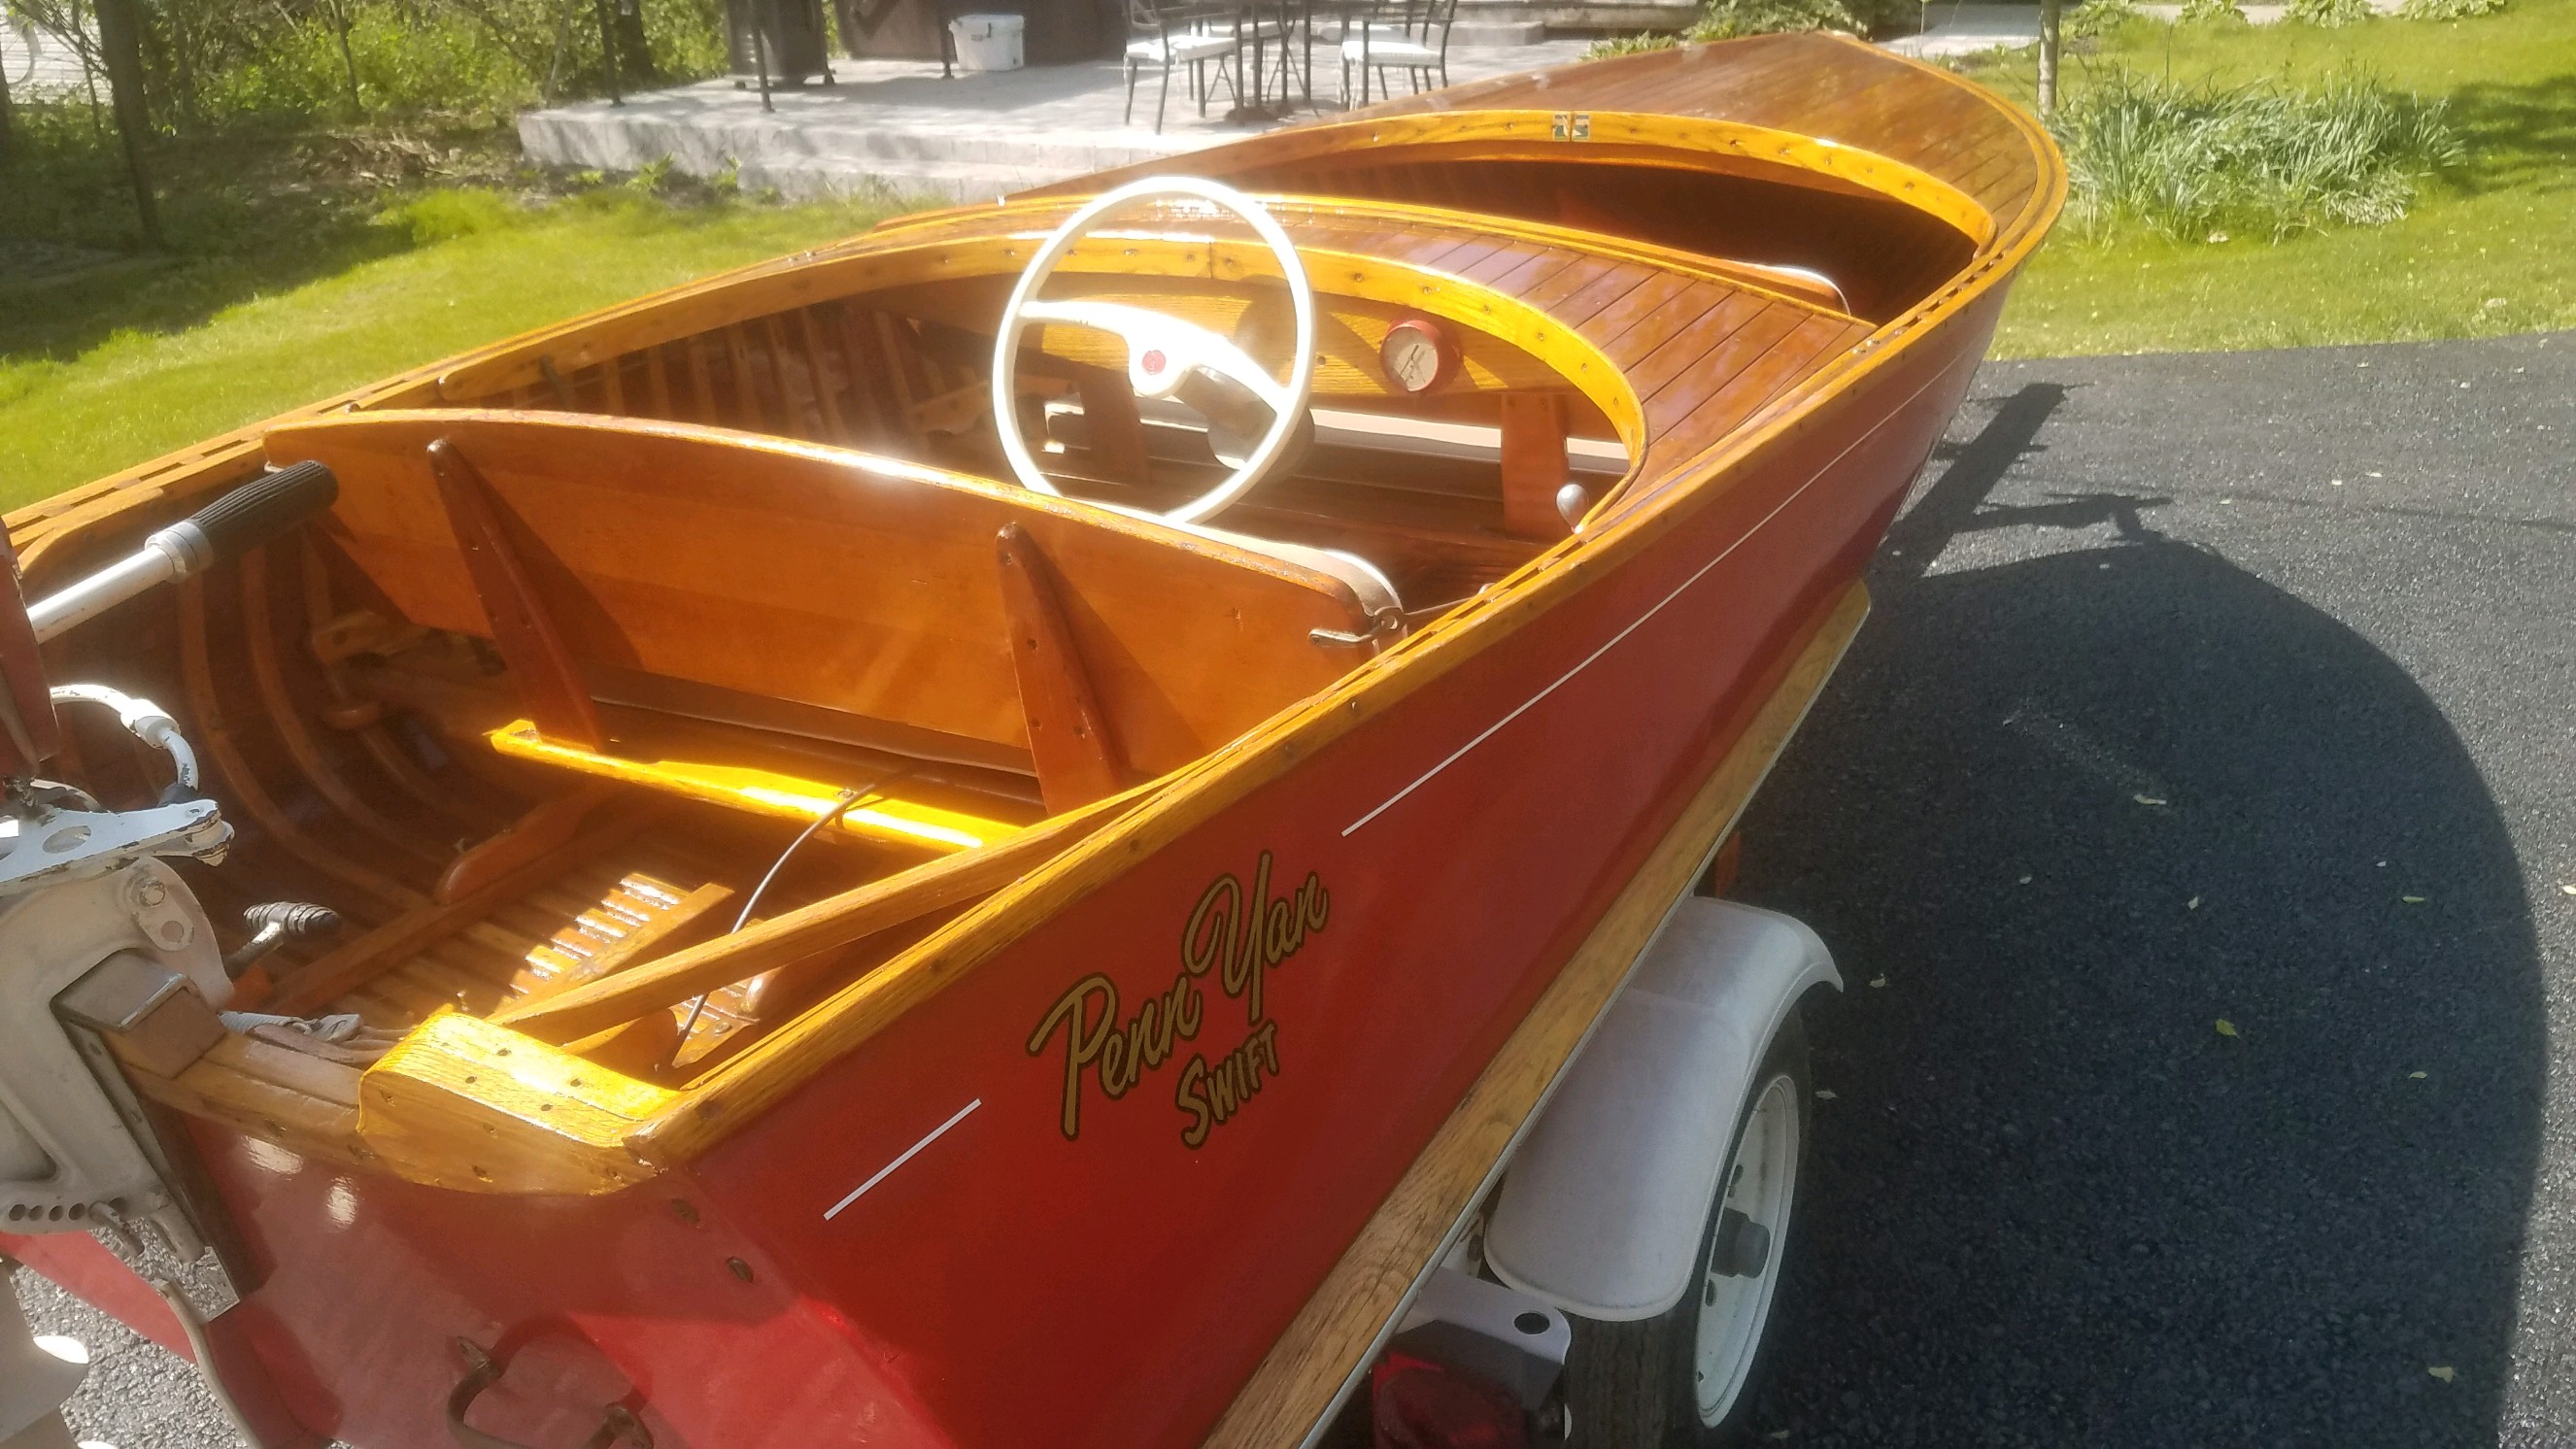 Antique boats under $10,000